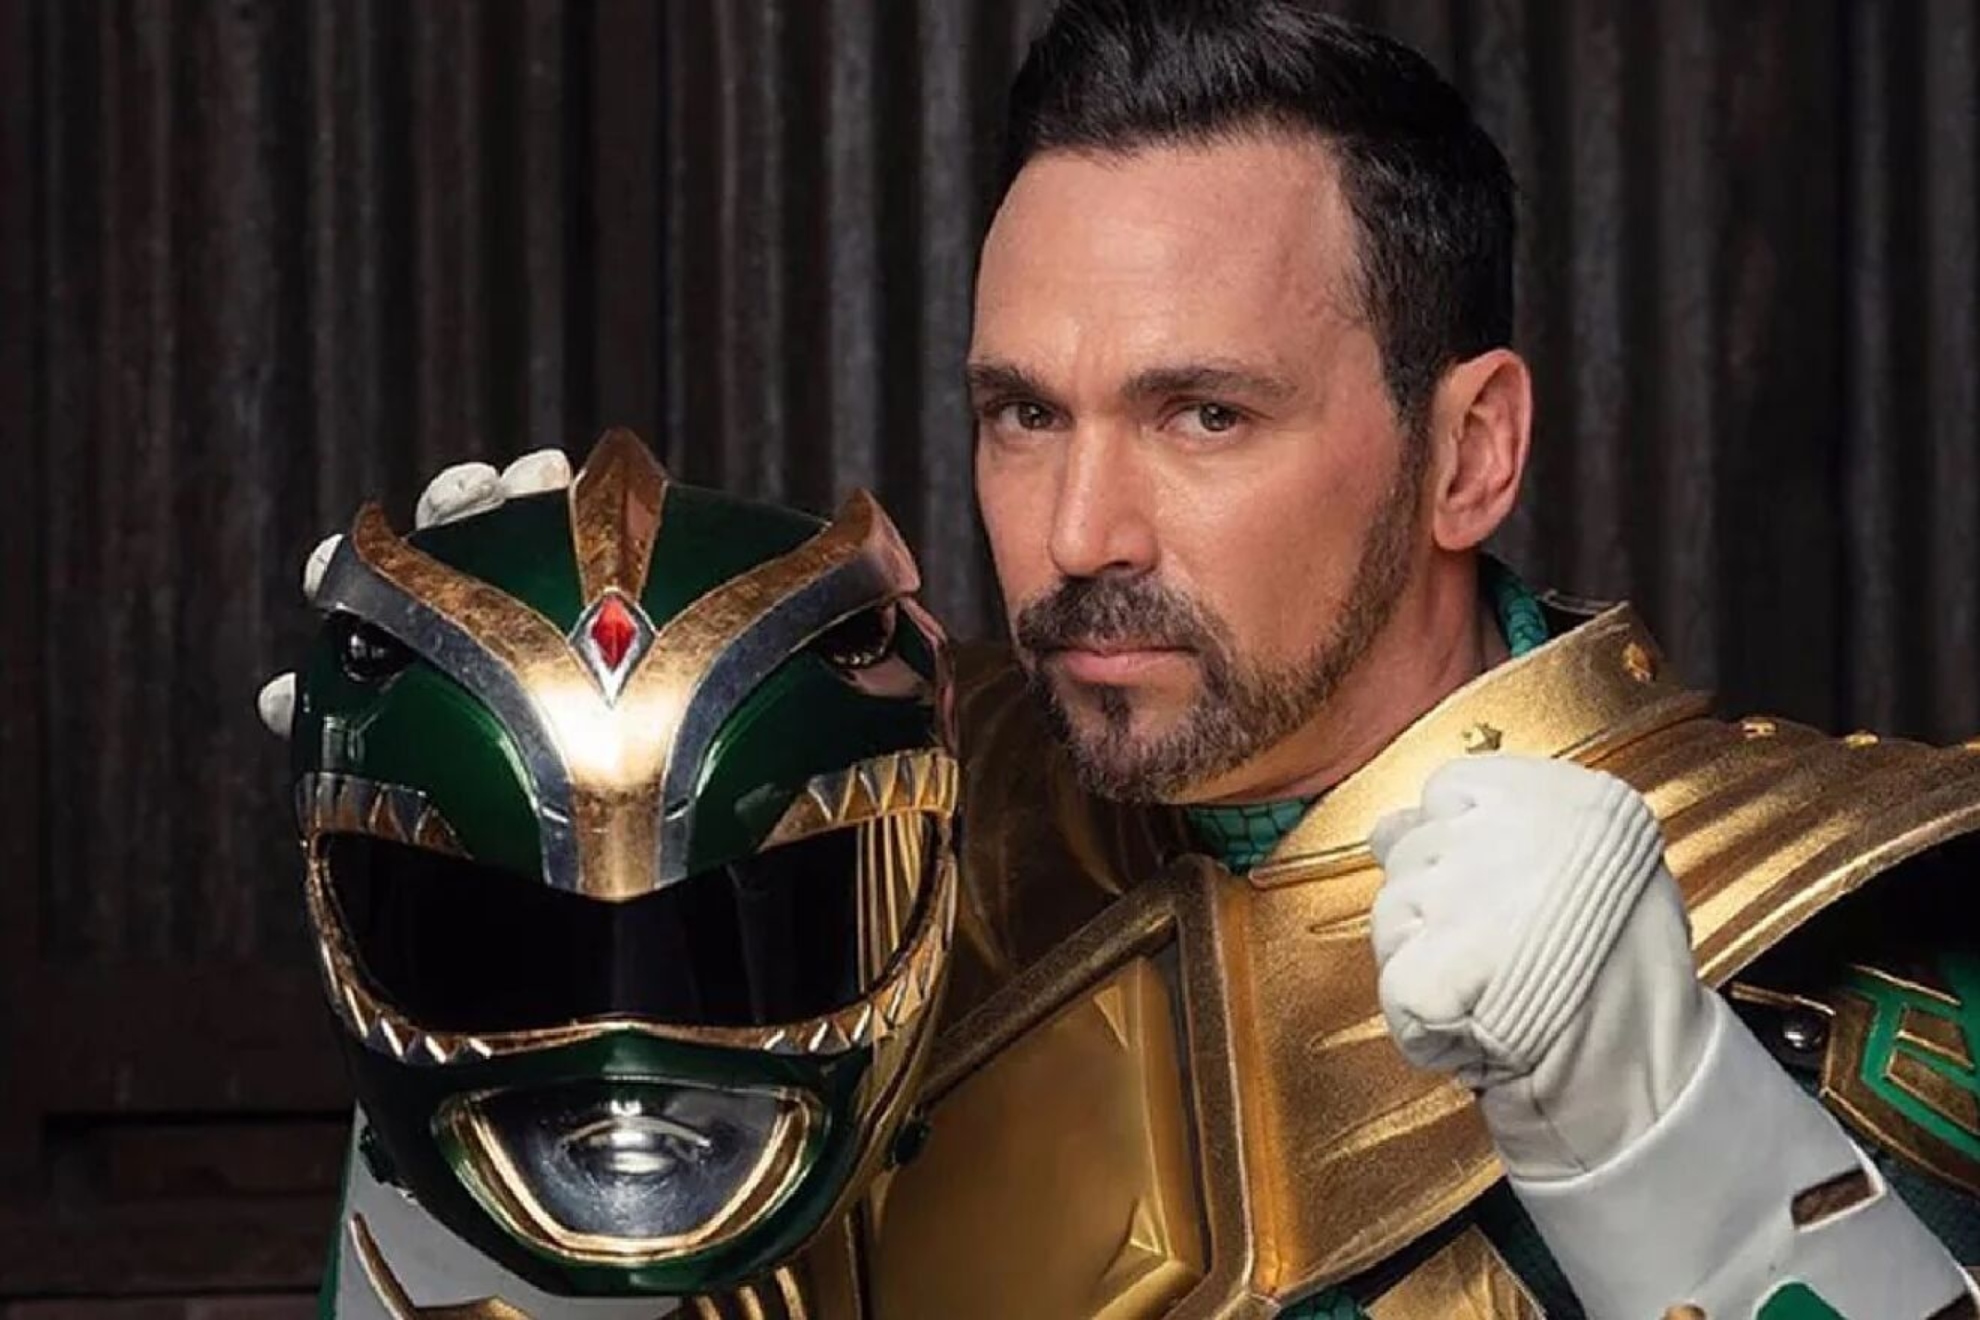 Green Power Ranger Actor